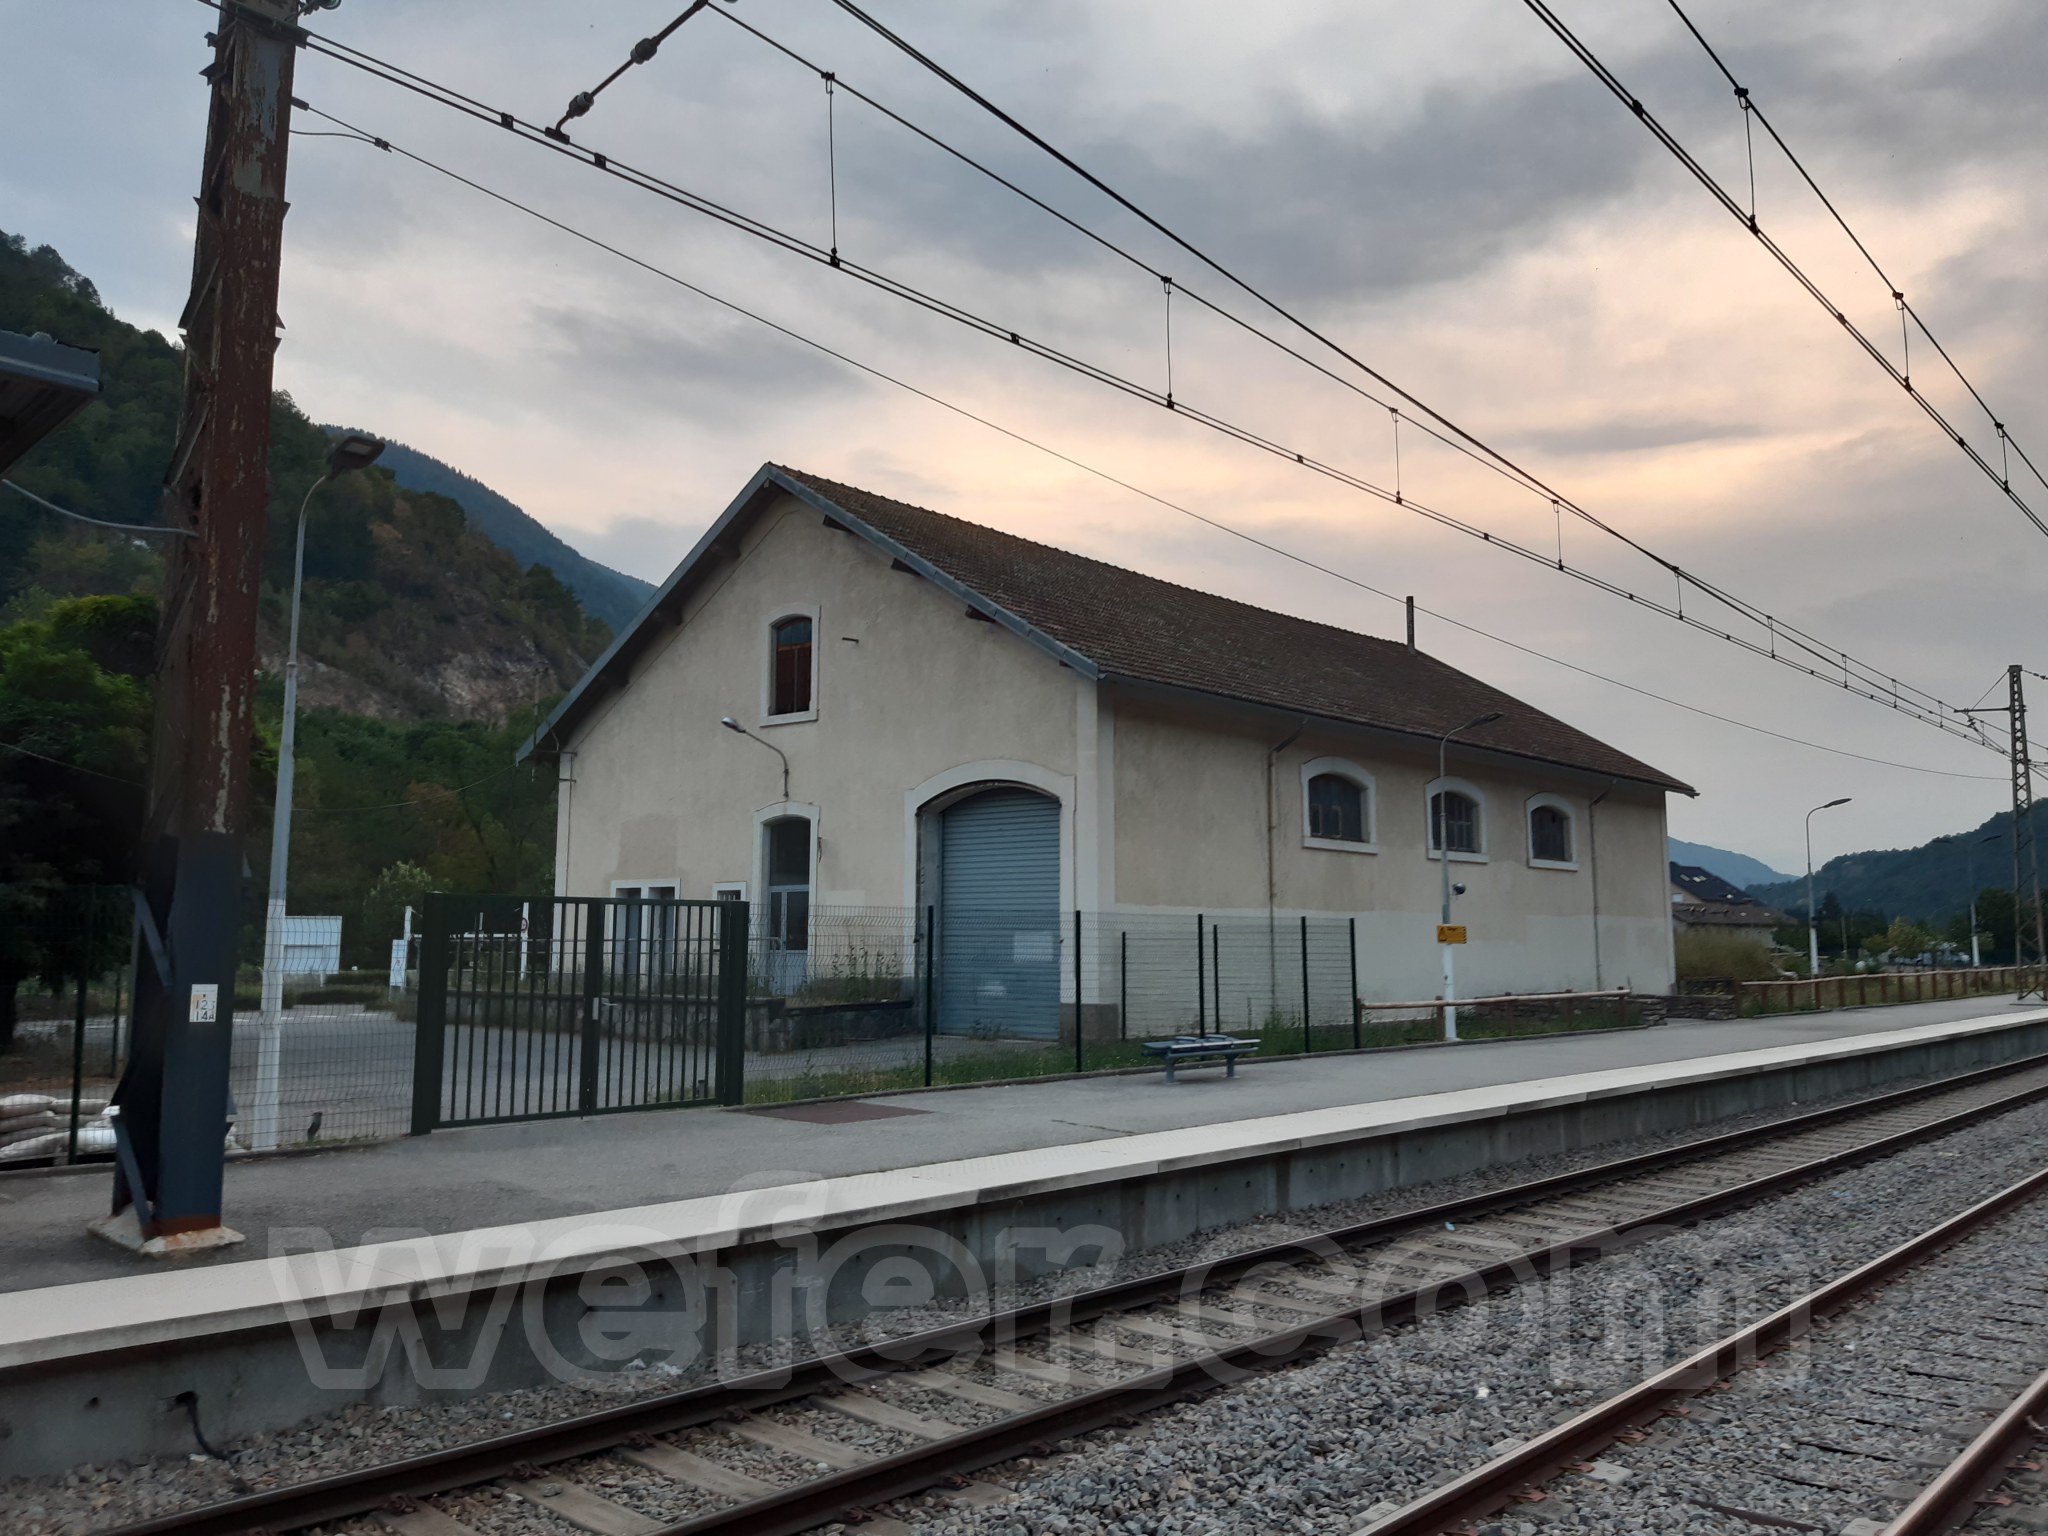 SNCF: Acs (Ax-les-Thermes)